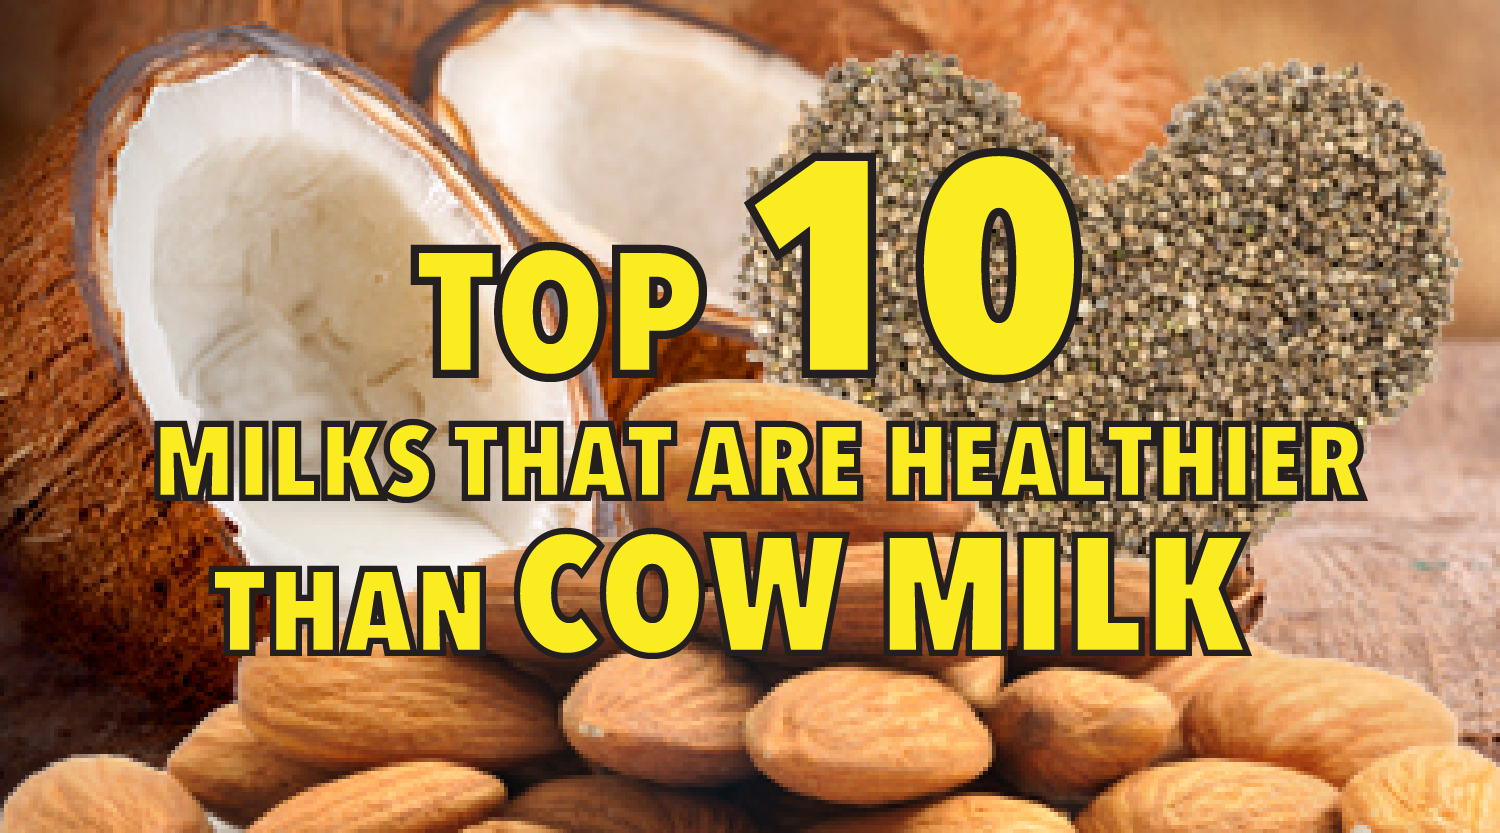 Top 10 milks that are healthier than cow milk